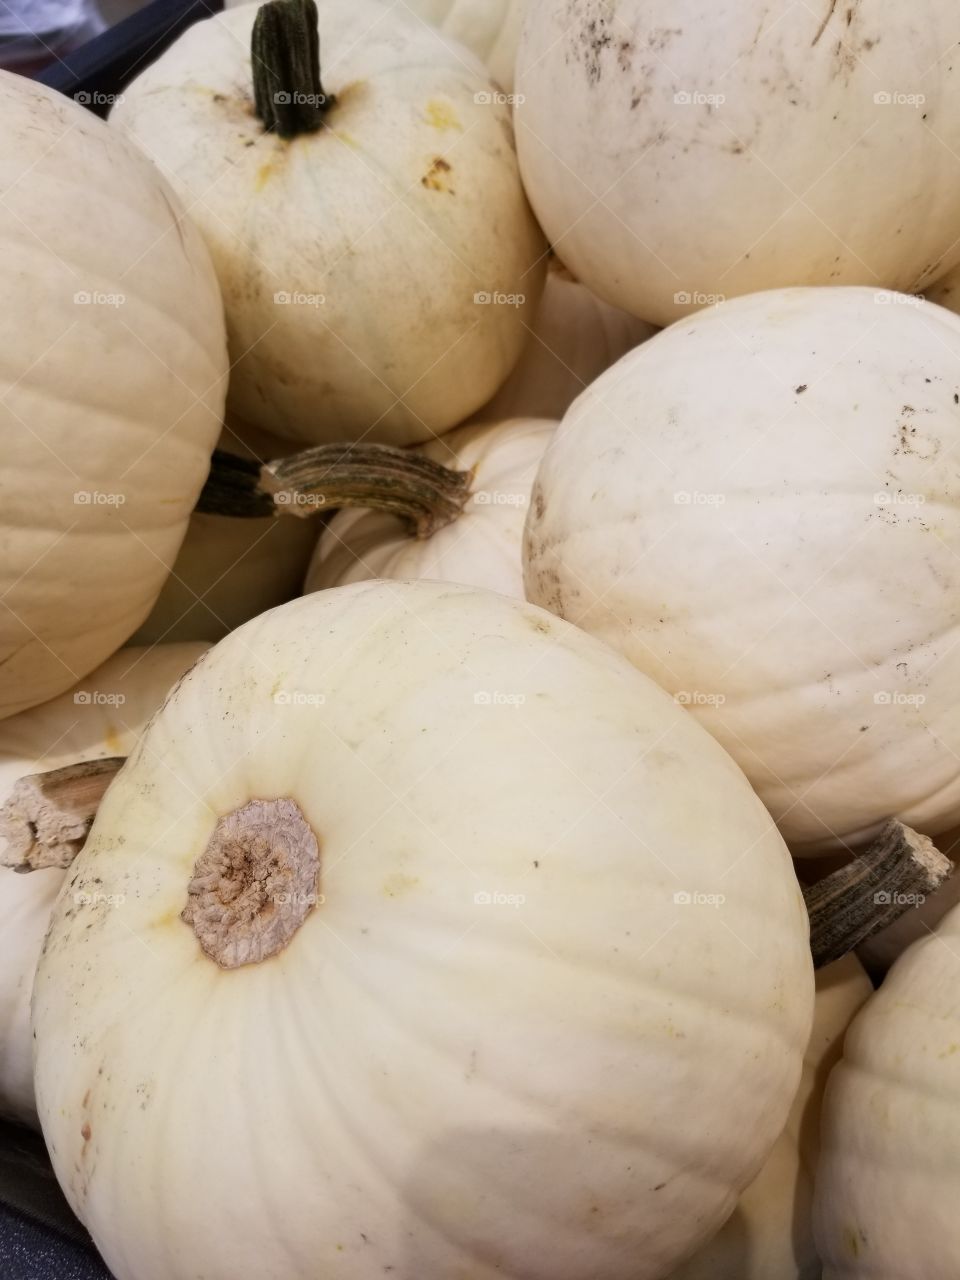 white pumpkins